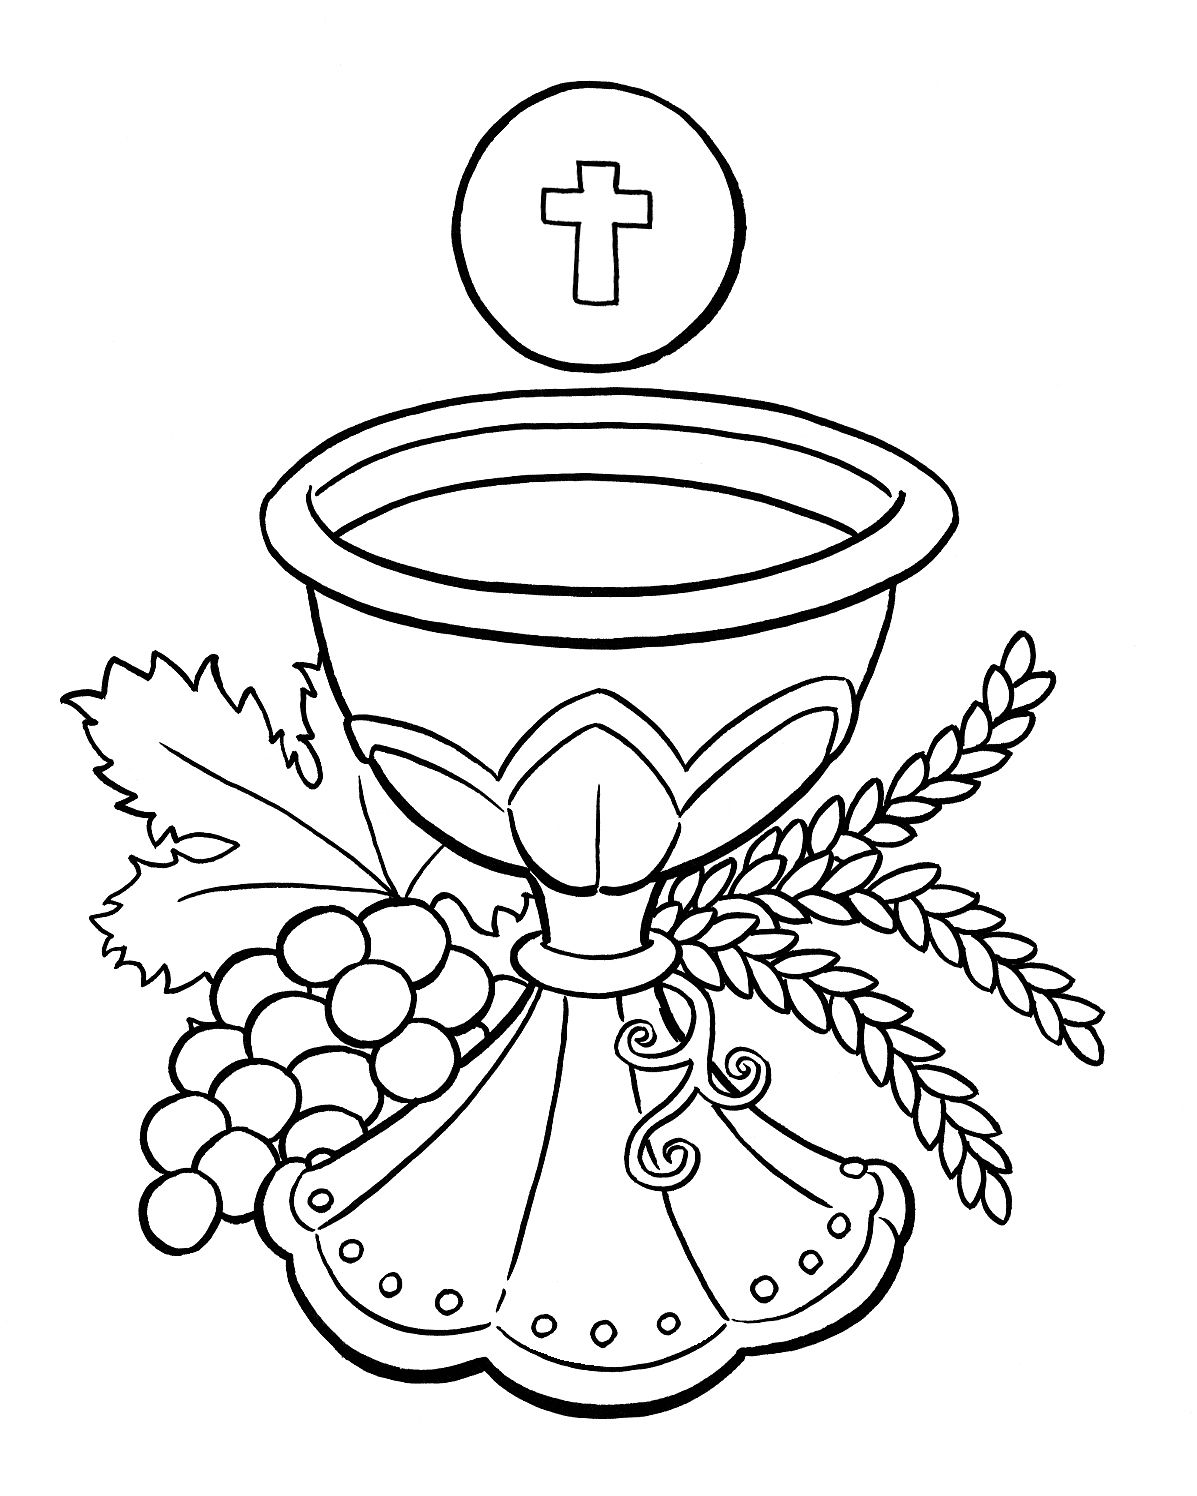 Chalice sacrament eucharist